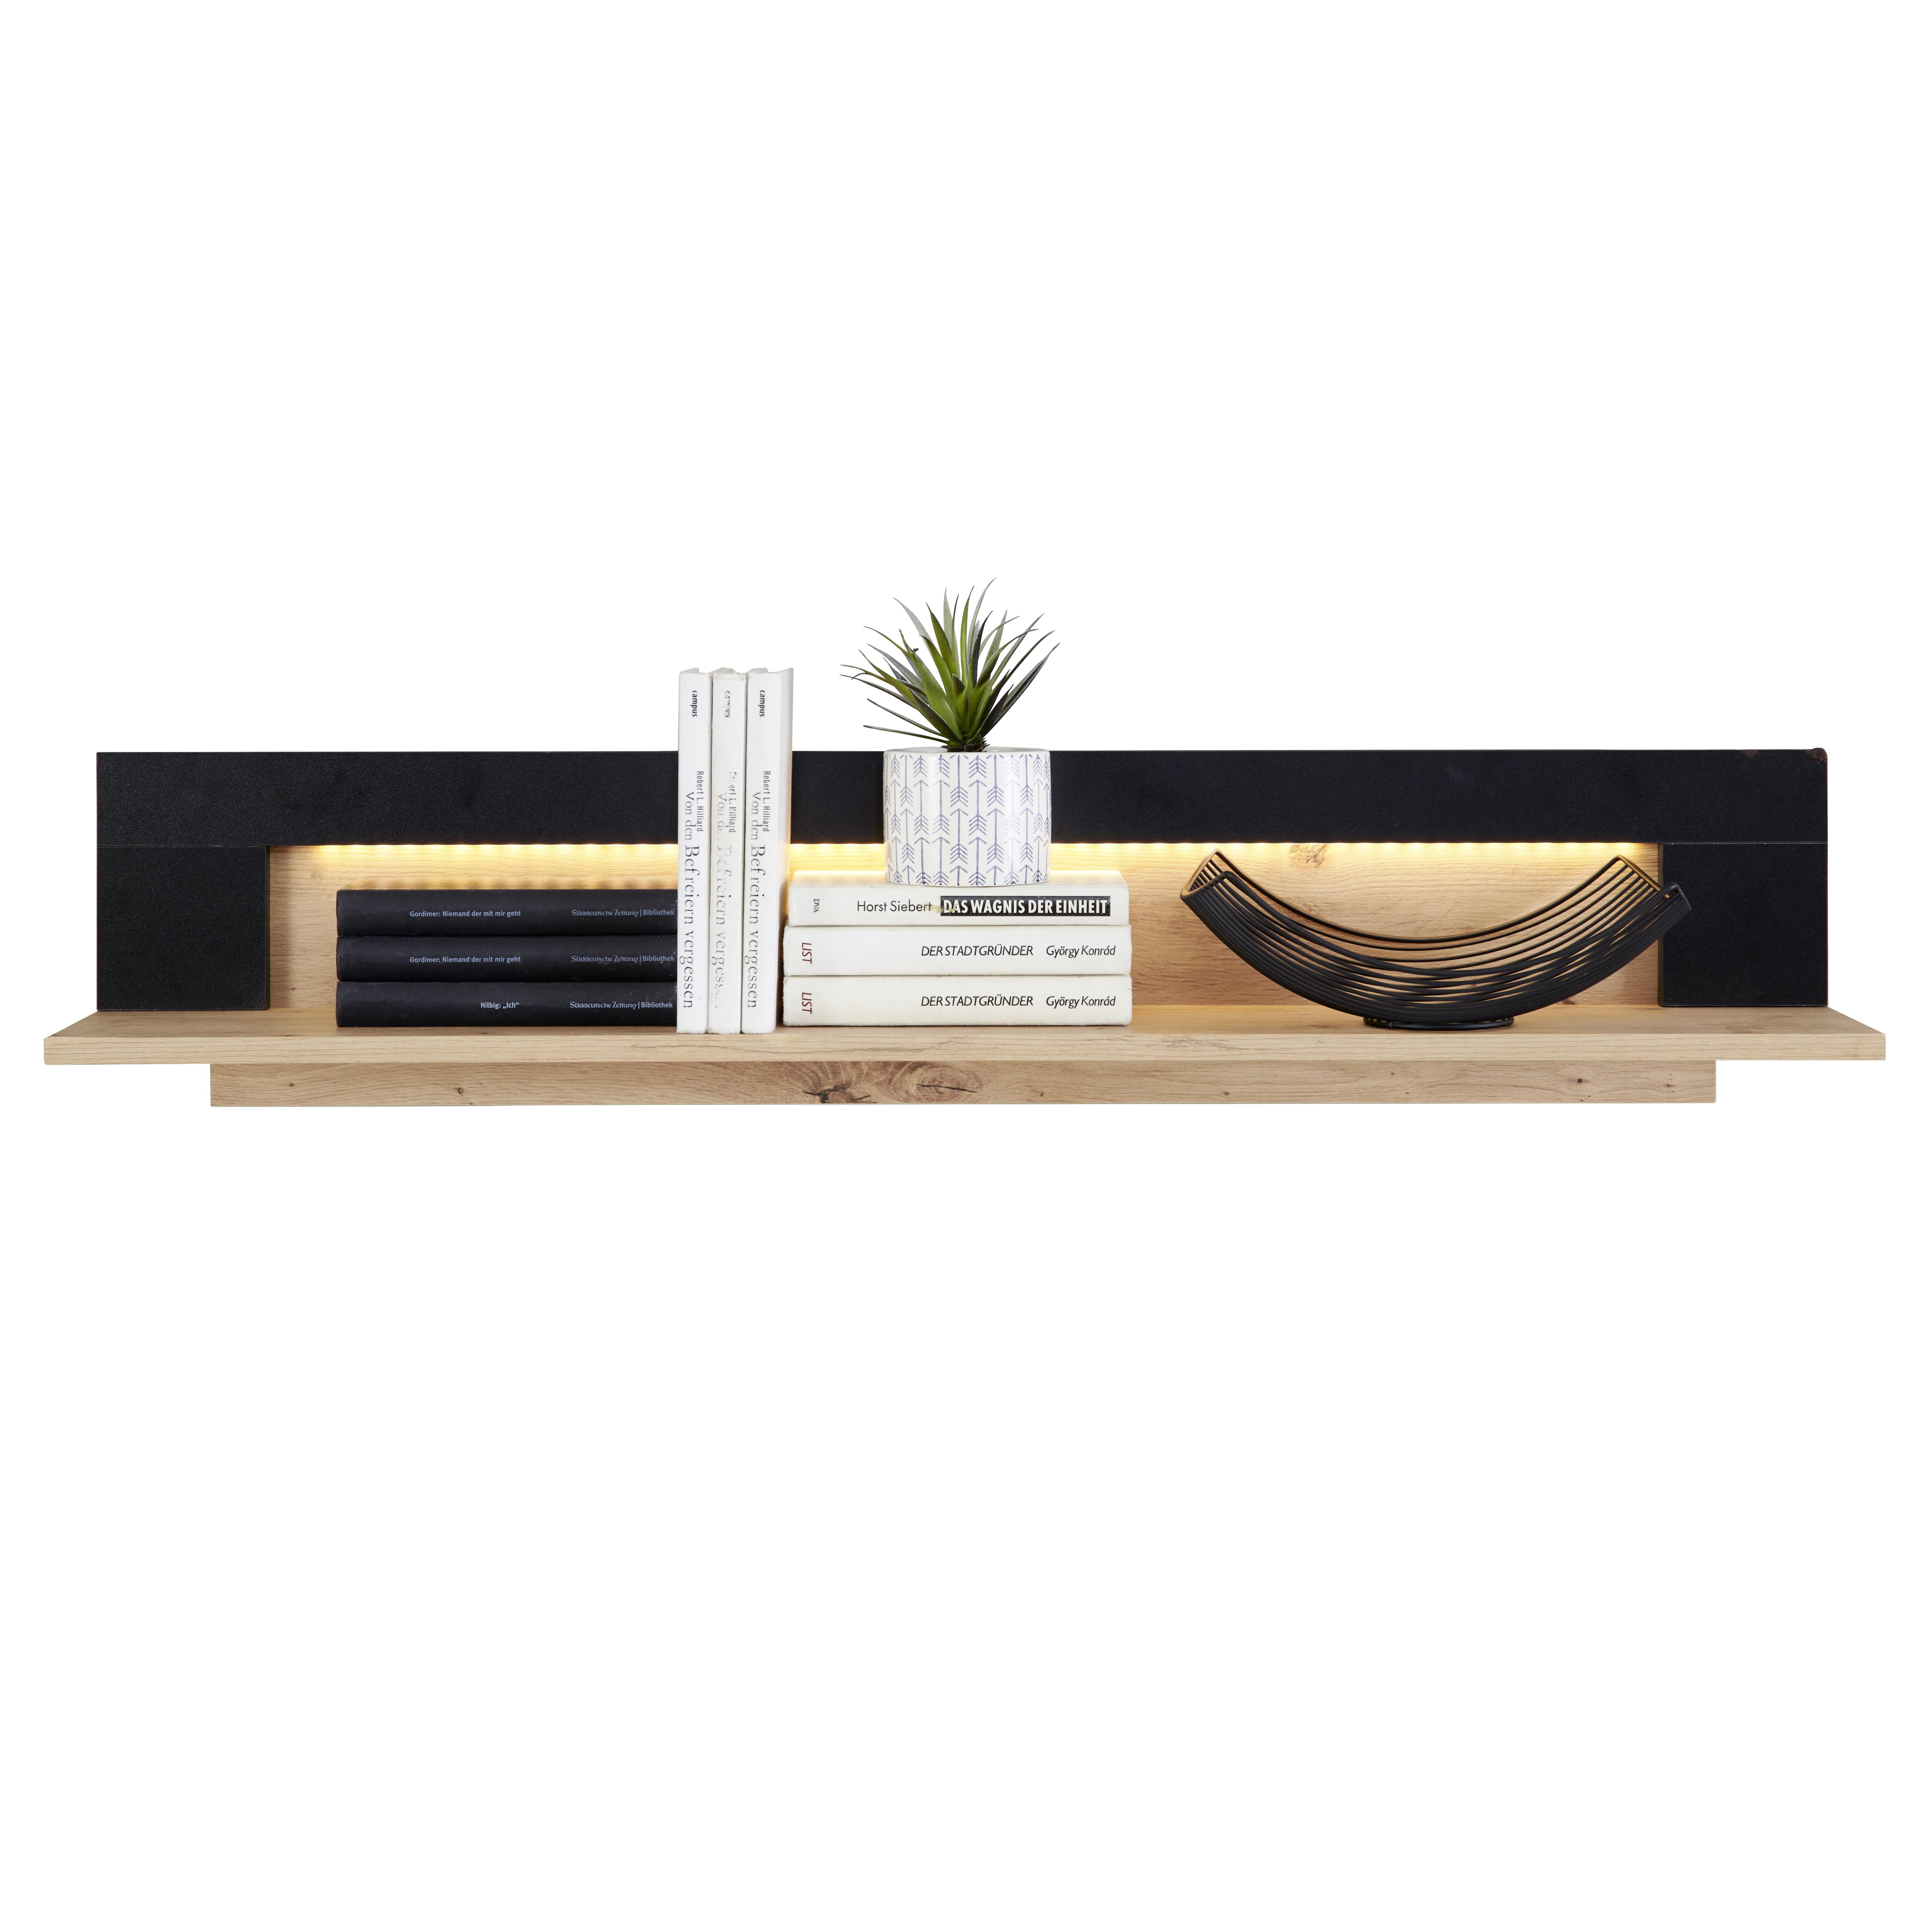 Polica Zidna Nyon - boje hrasta/crna, Modern, drvni materijal (110/23/19,6cm) - Modern Living